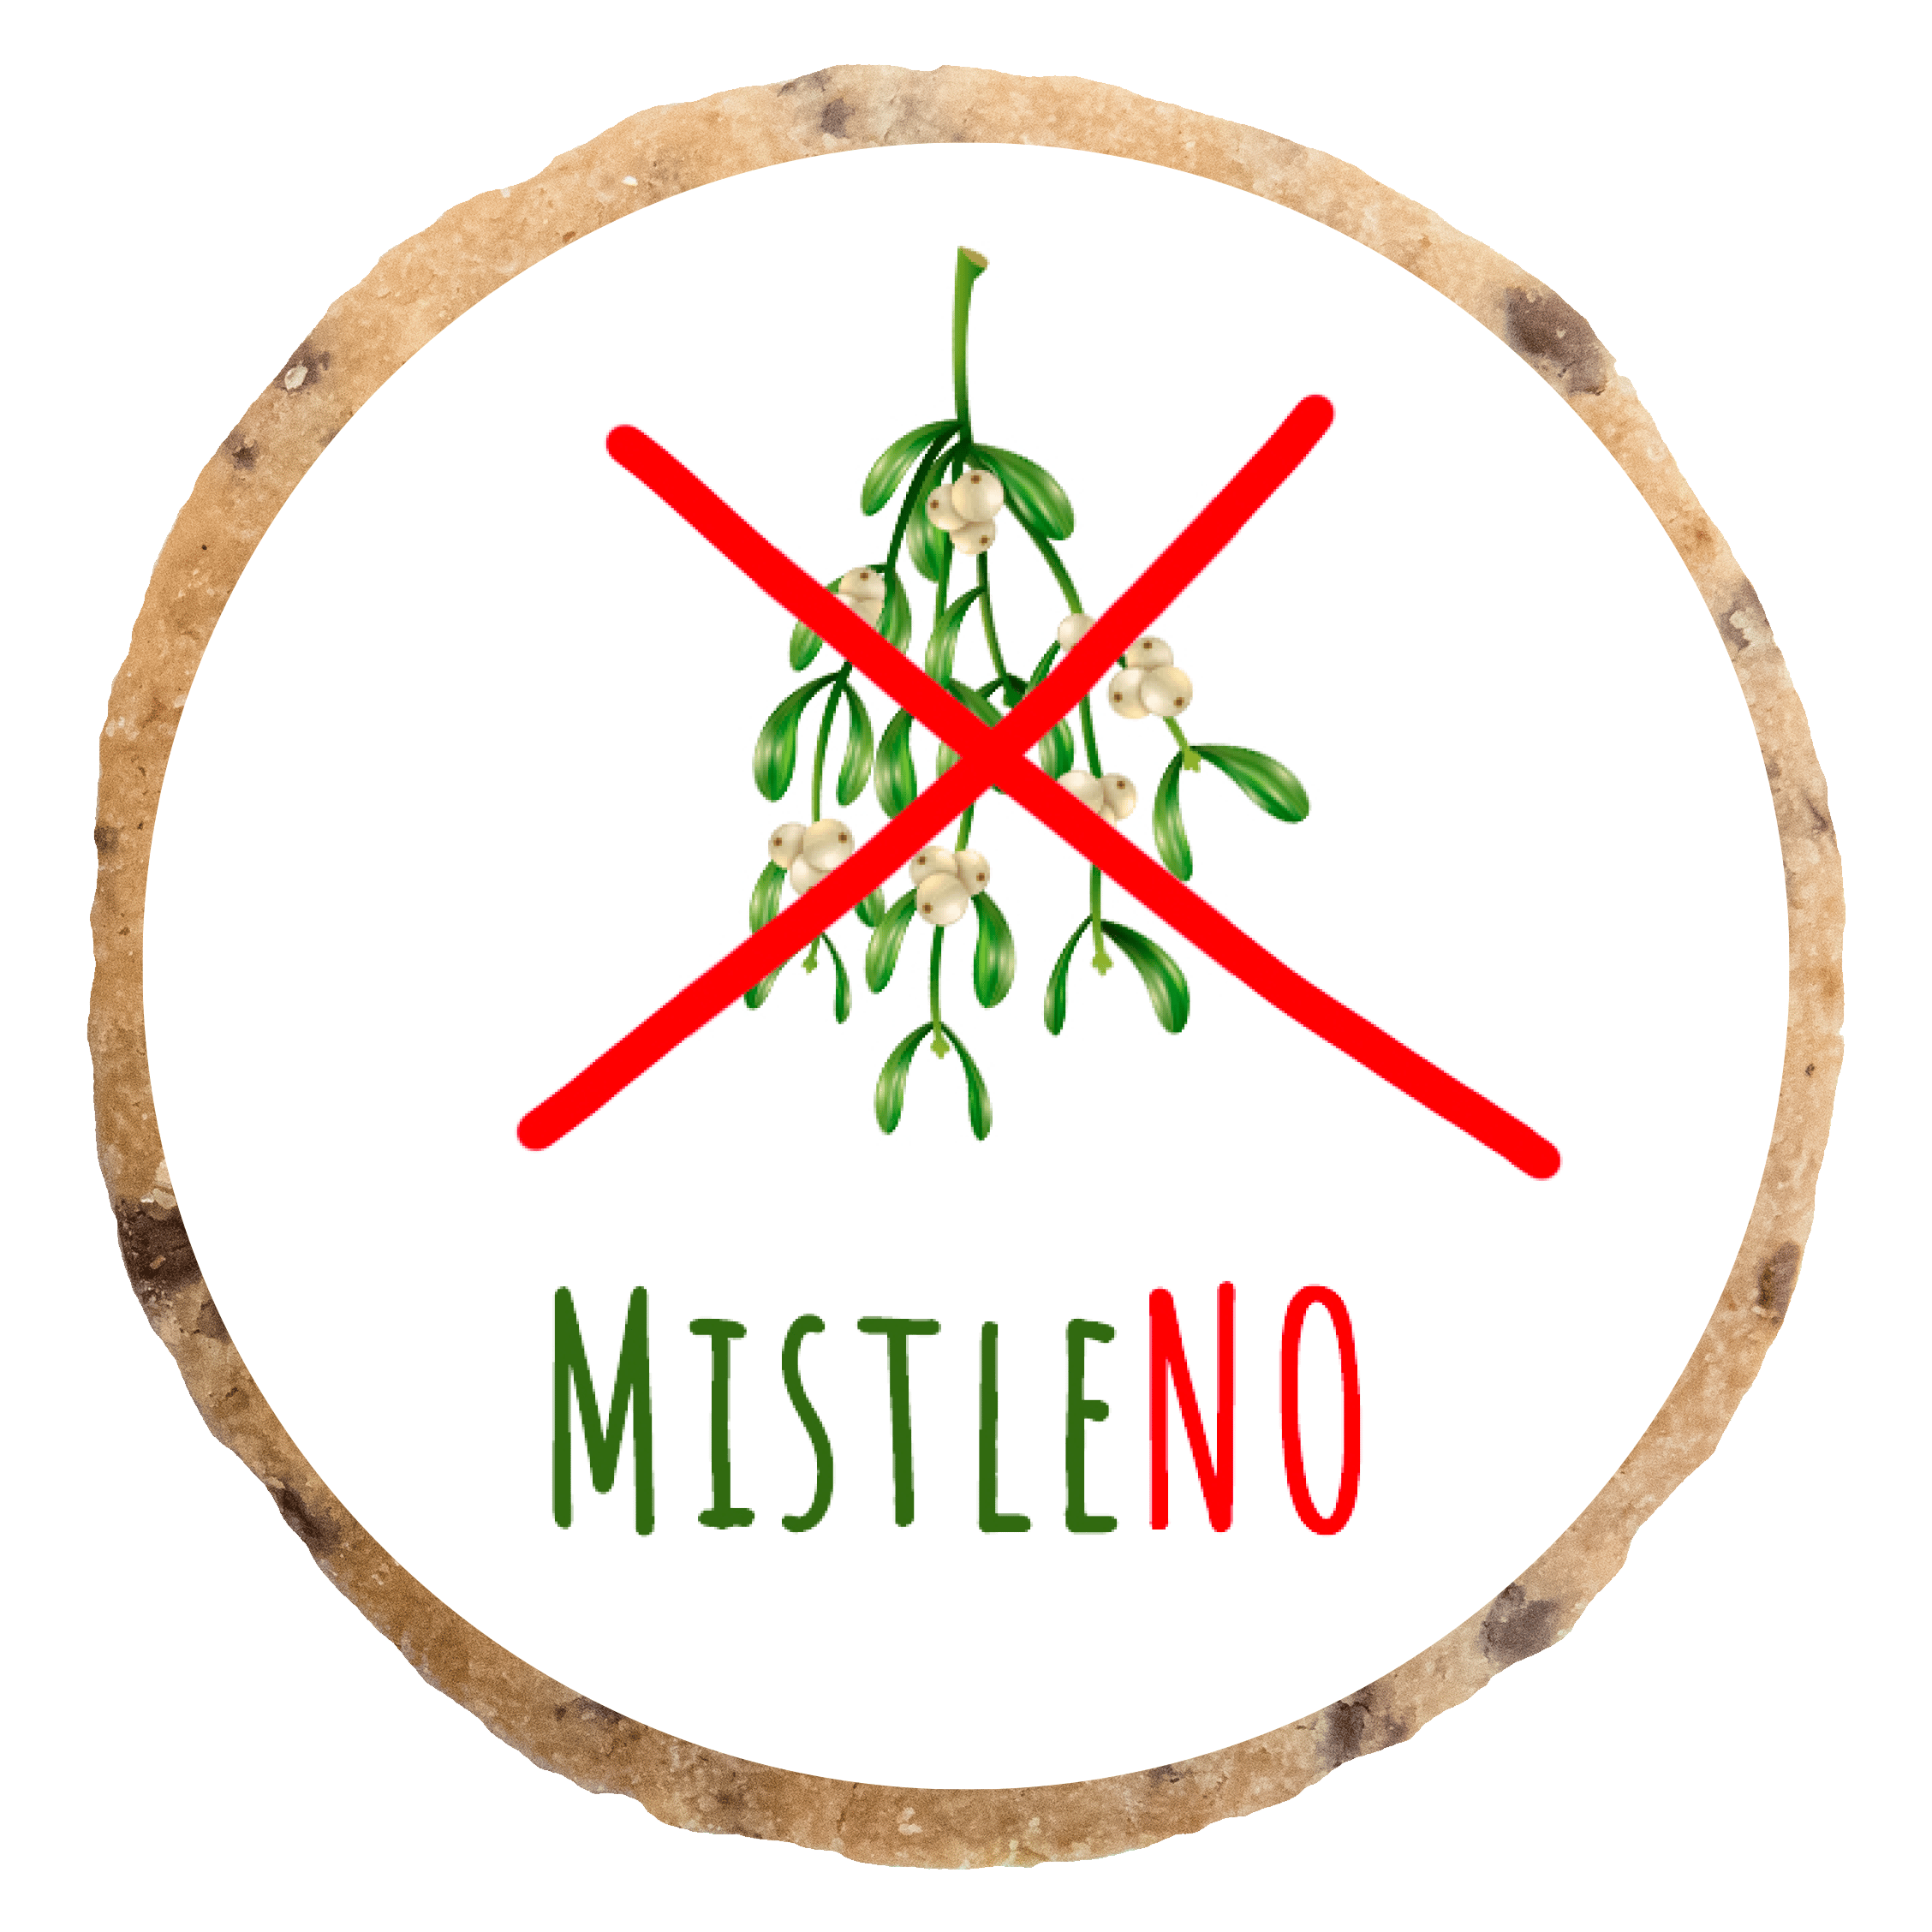 "MistleNO" MotivKEKS